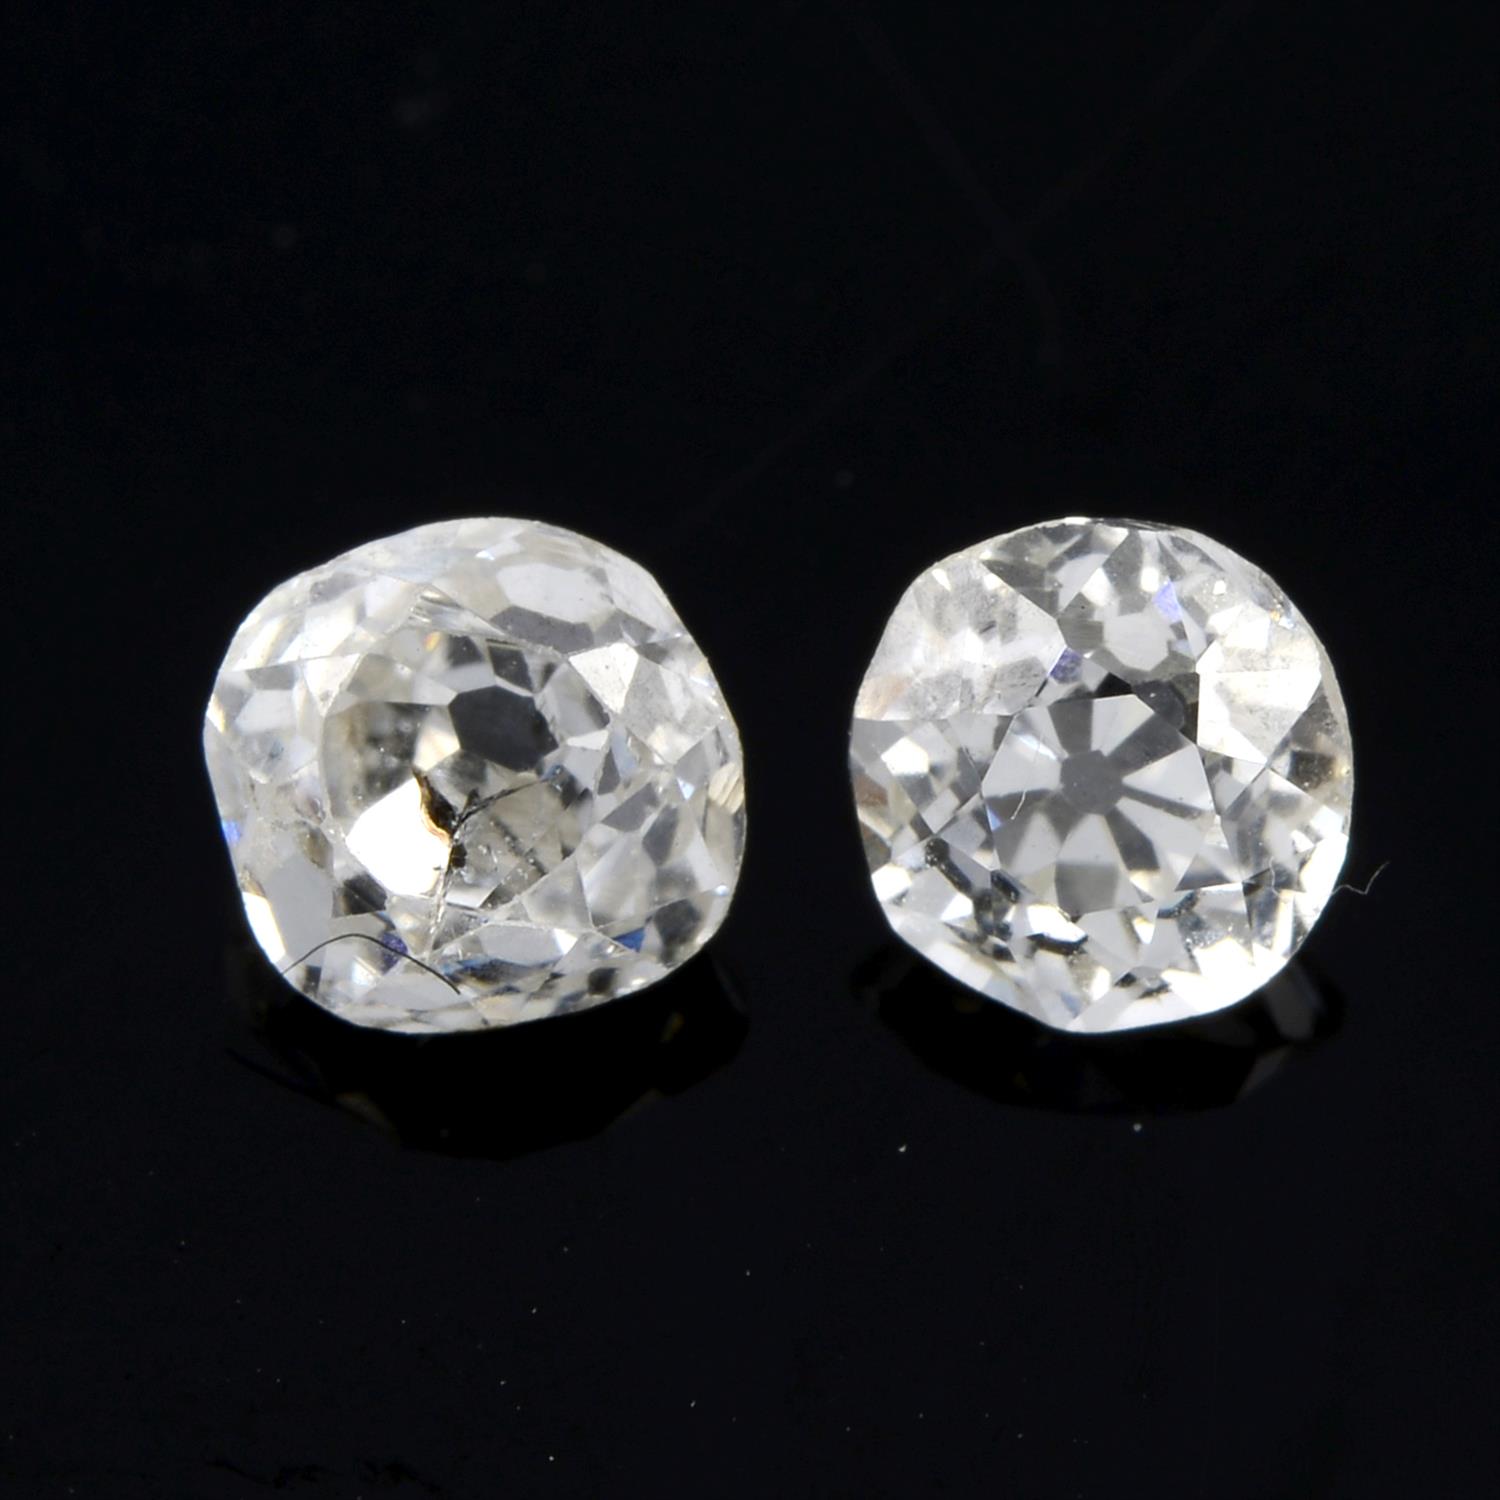 Two old-cut diamonds, 0.51ct